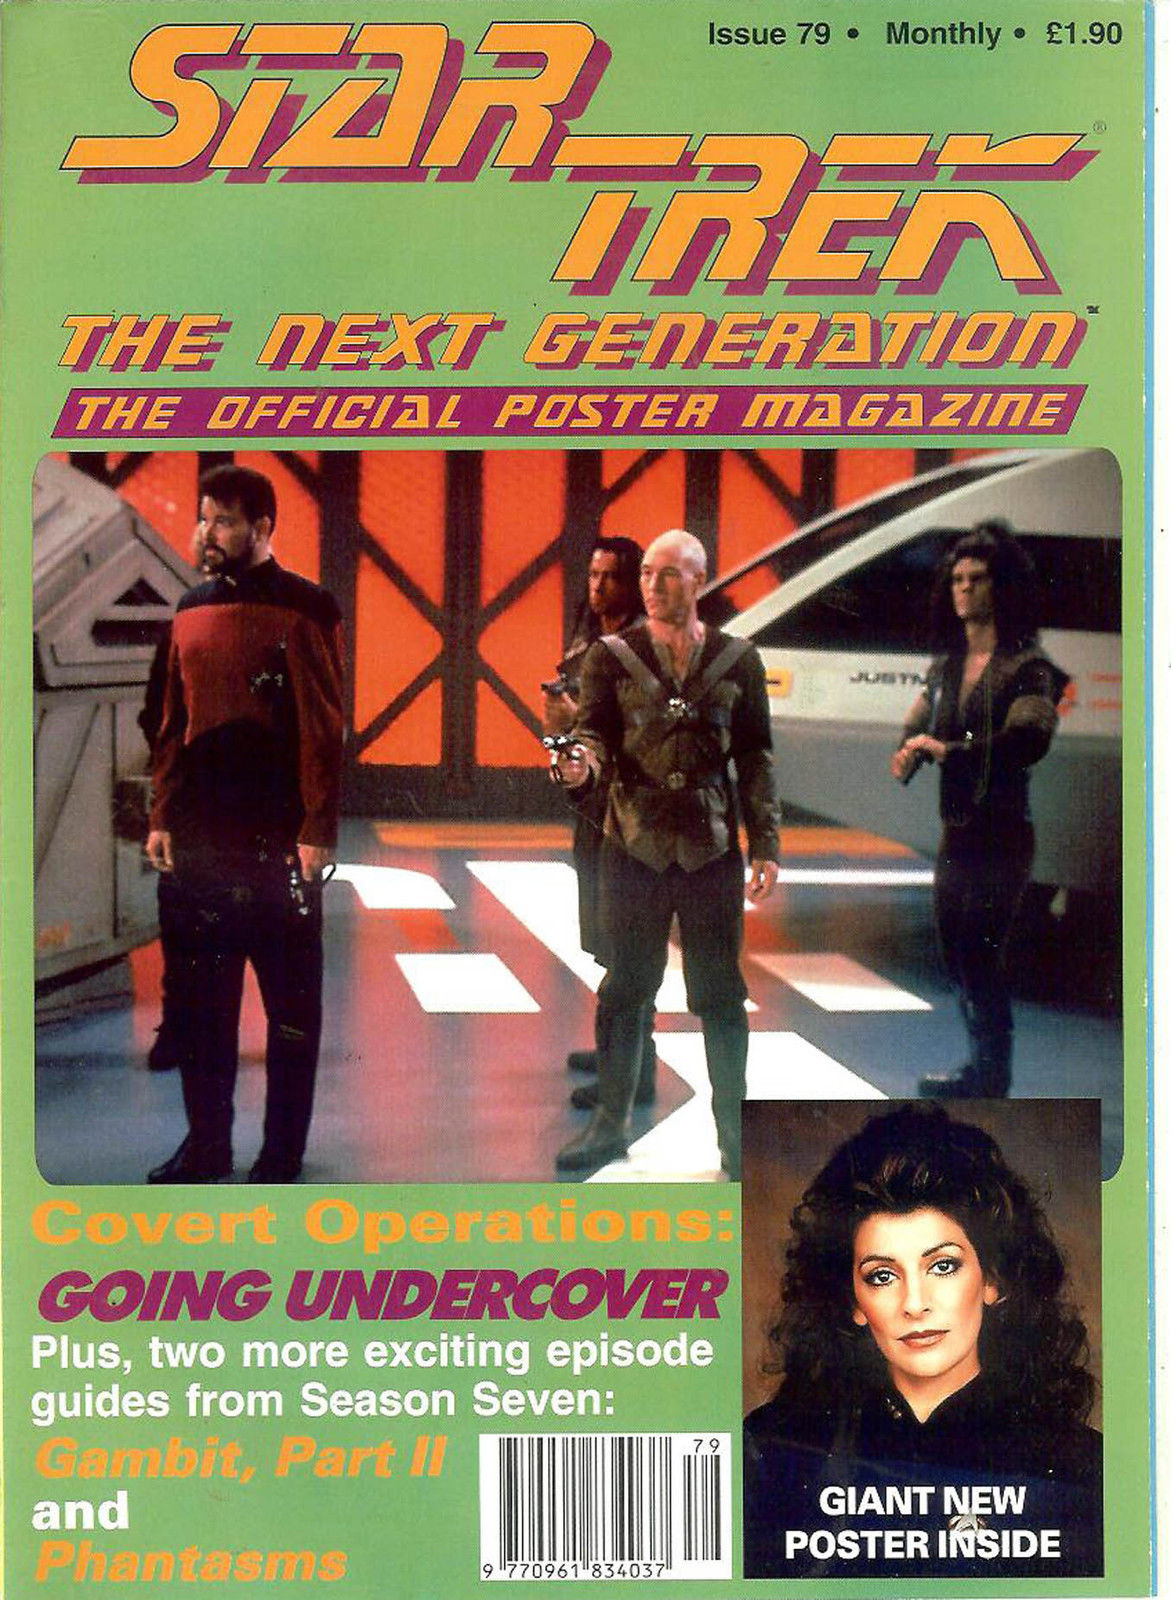 Star Trek: The Next Generation Poster Magazine #79